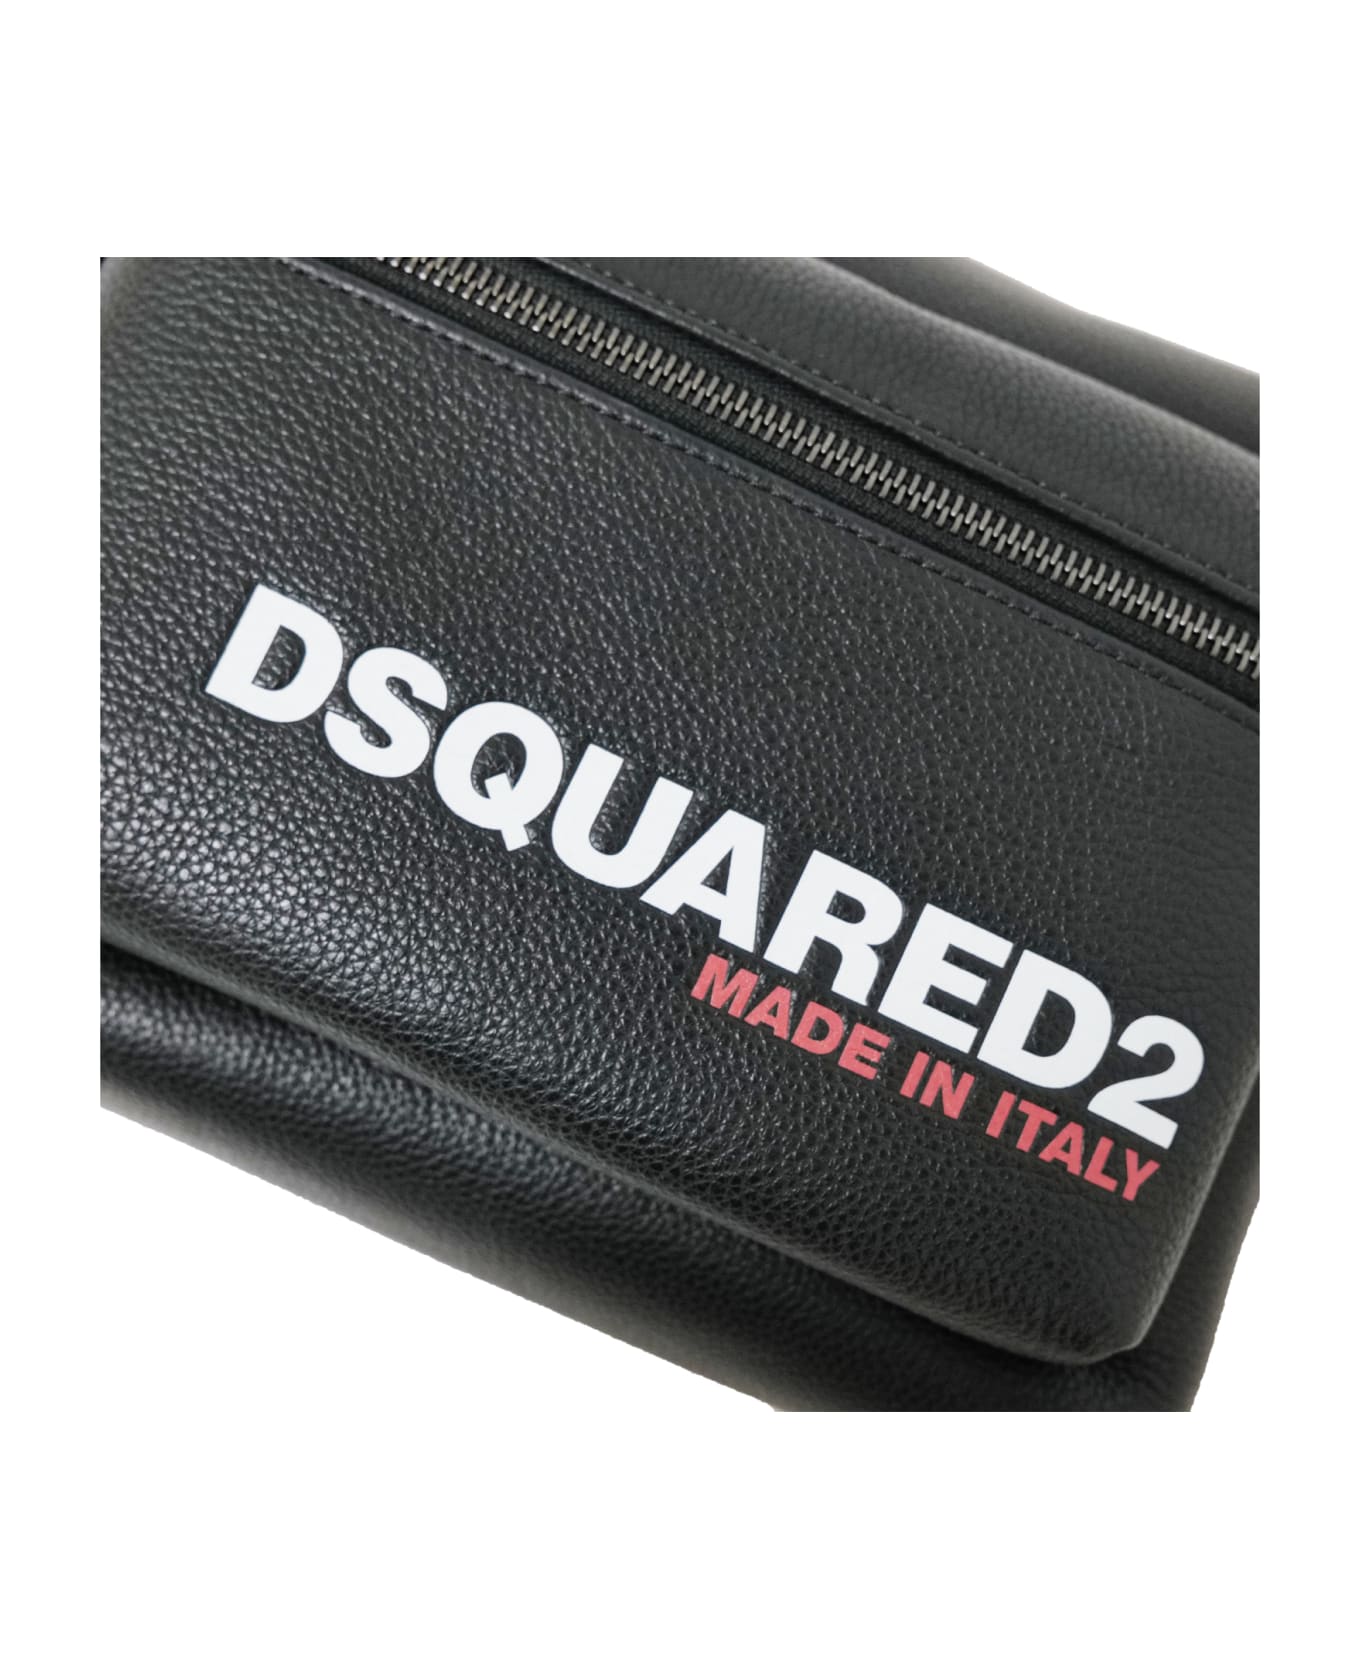 Dsquared2 Handbag - Black トートバッグ